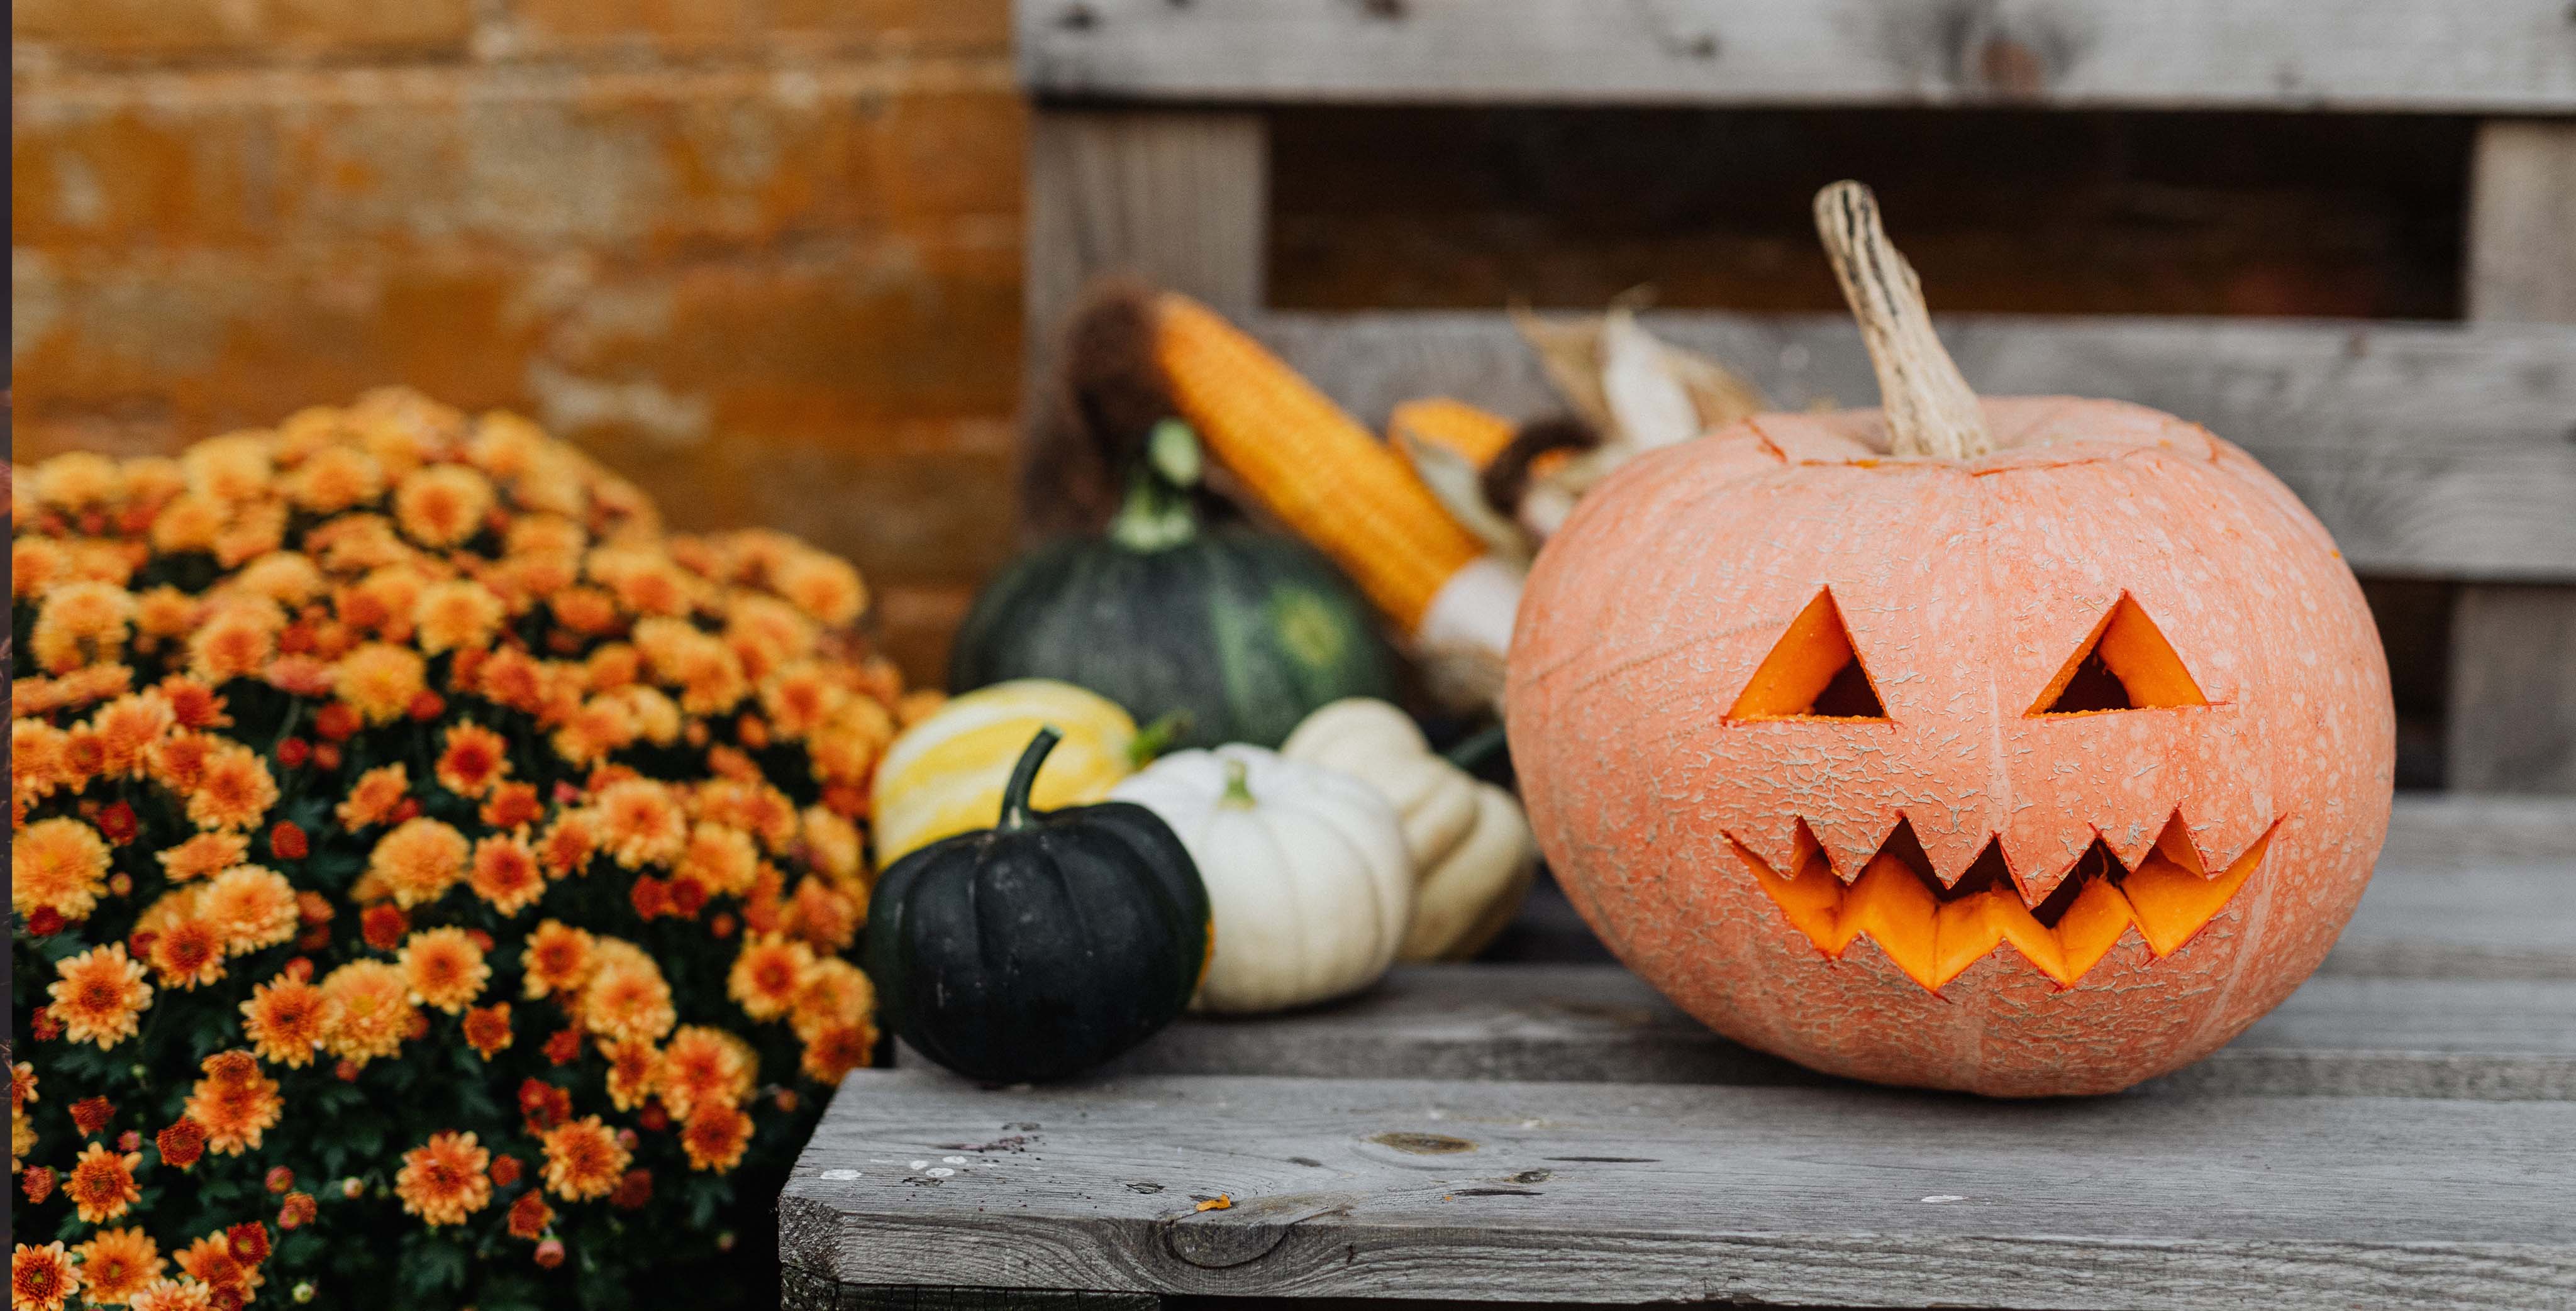 Pumpkin and halloween decorations